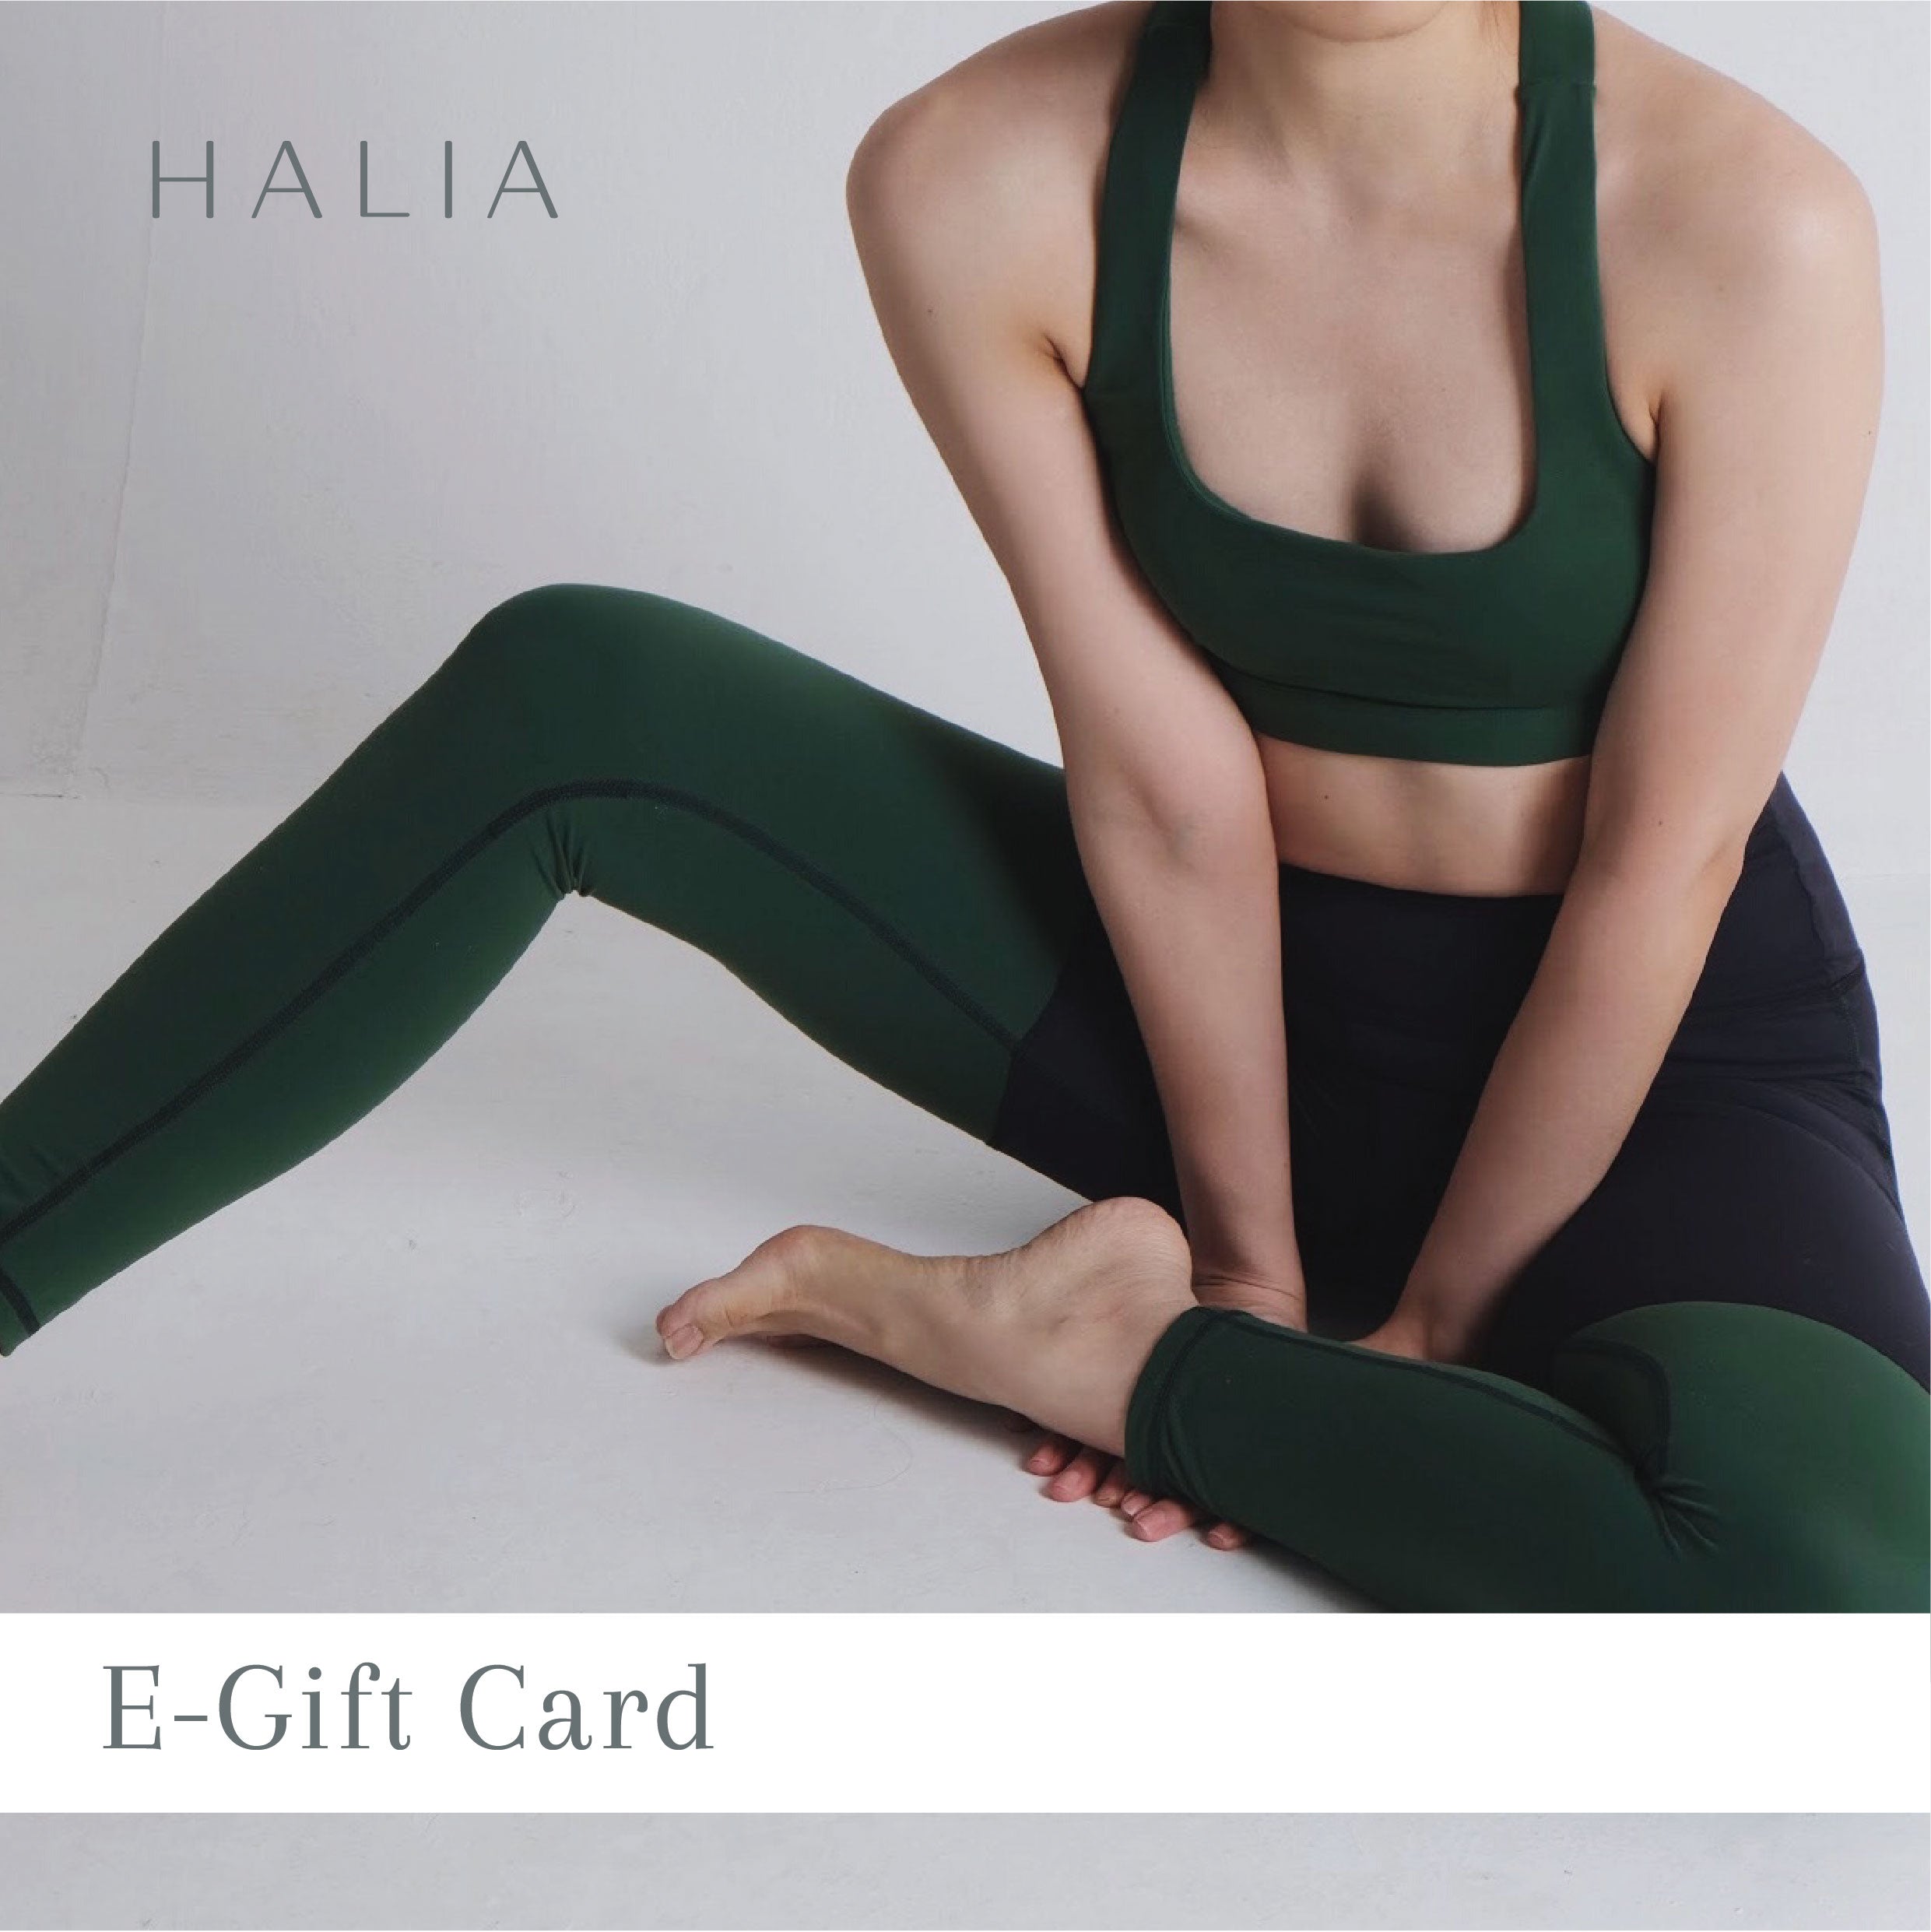 Halia Gift Card